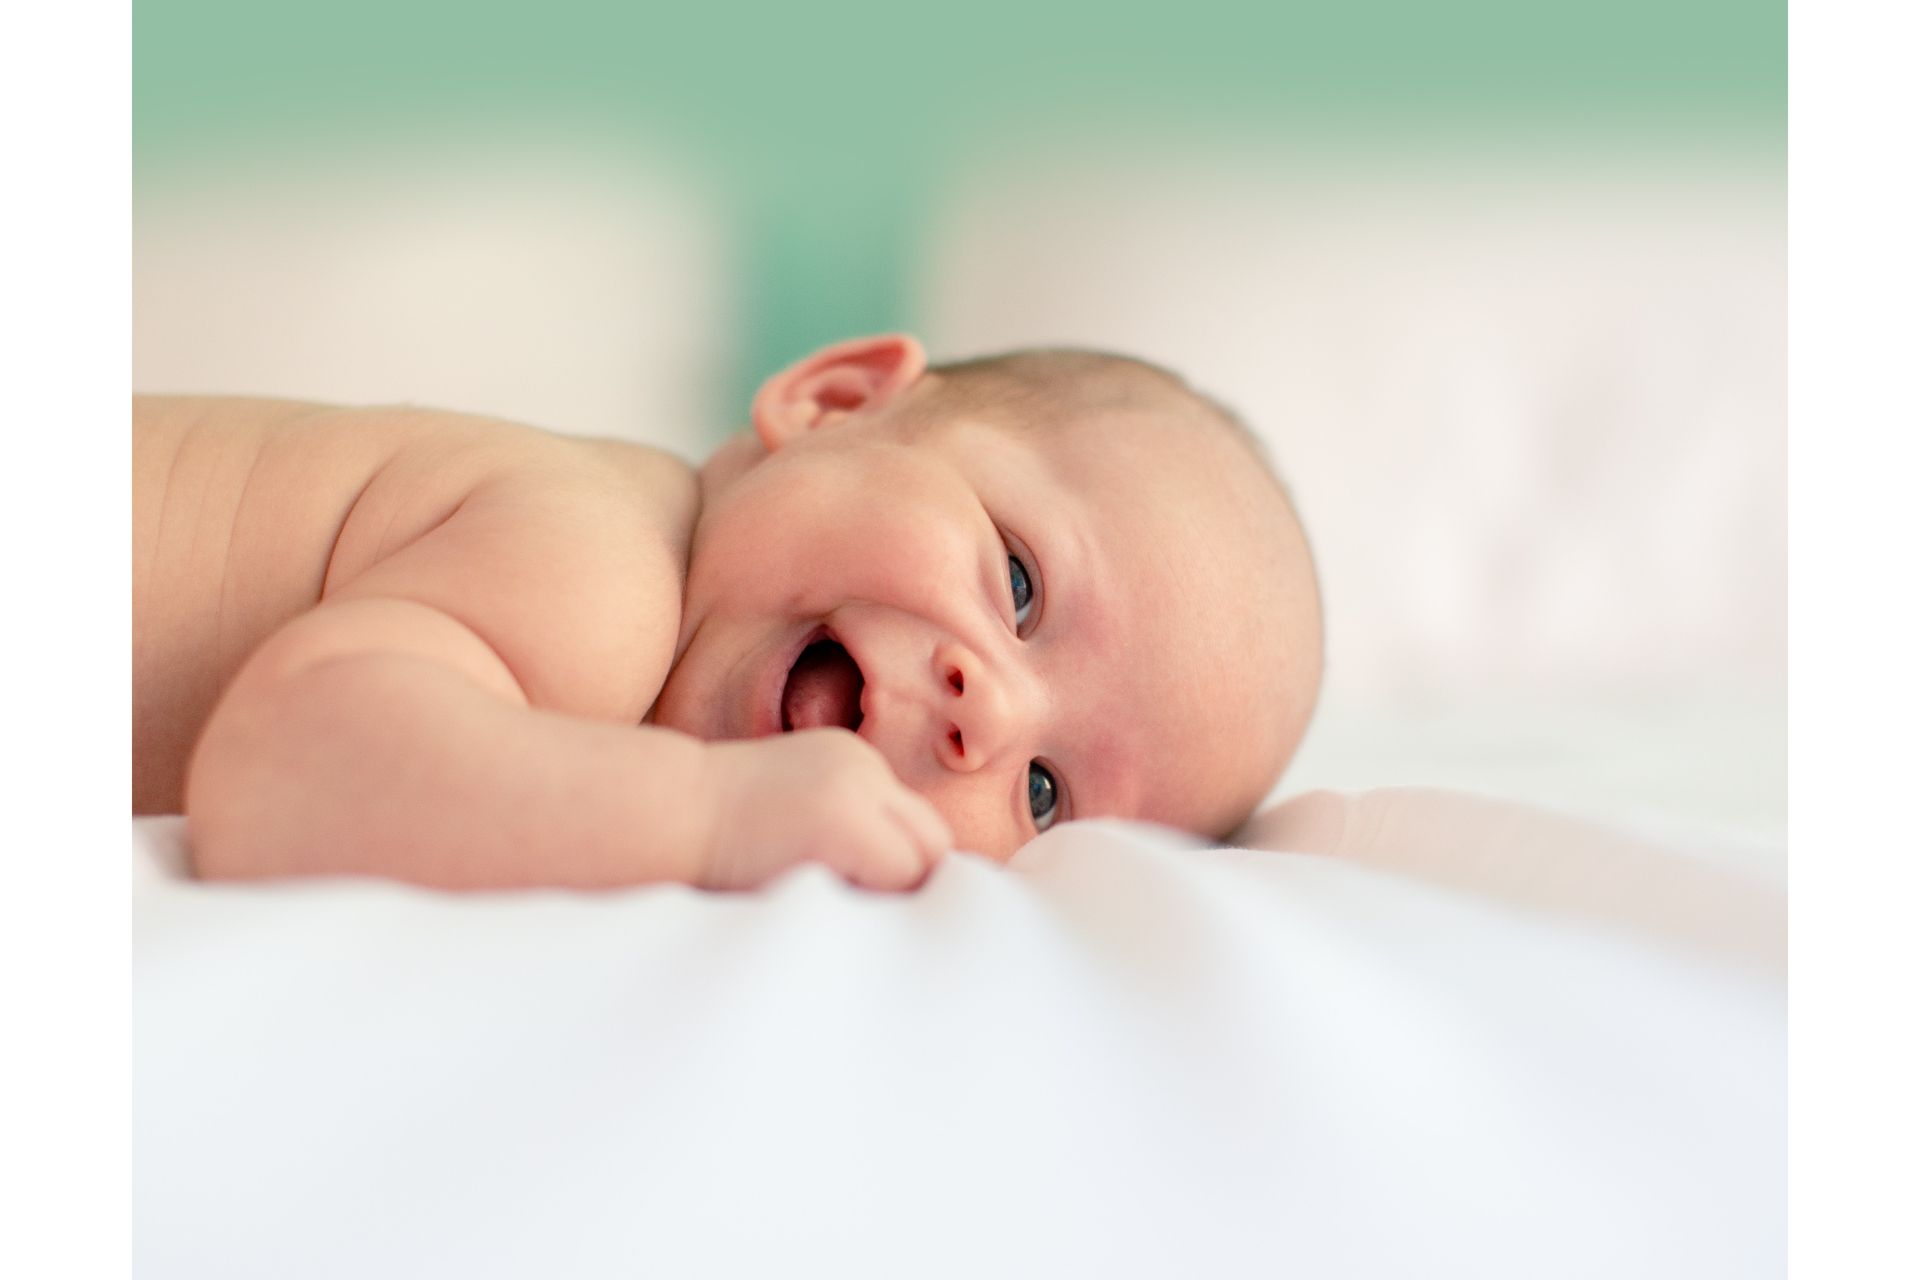 Newborn smiling, lying on a white sheet